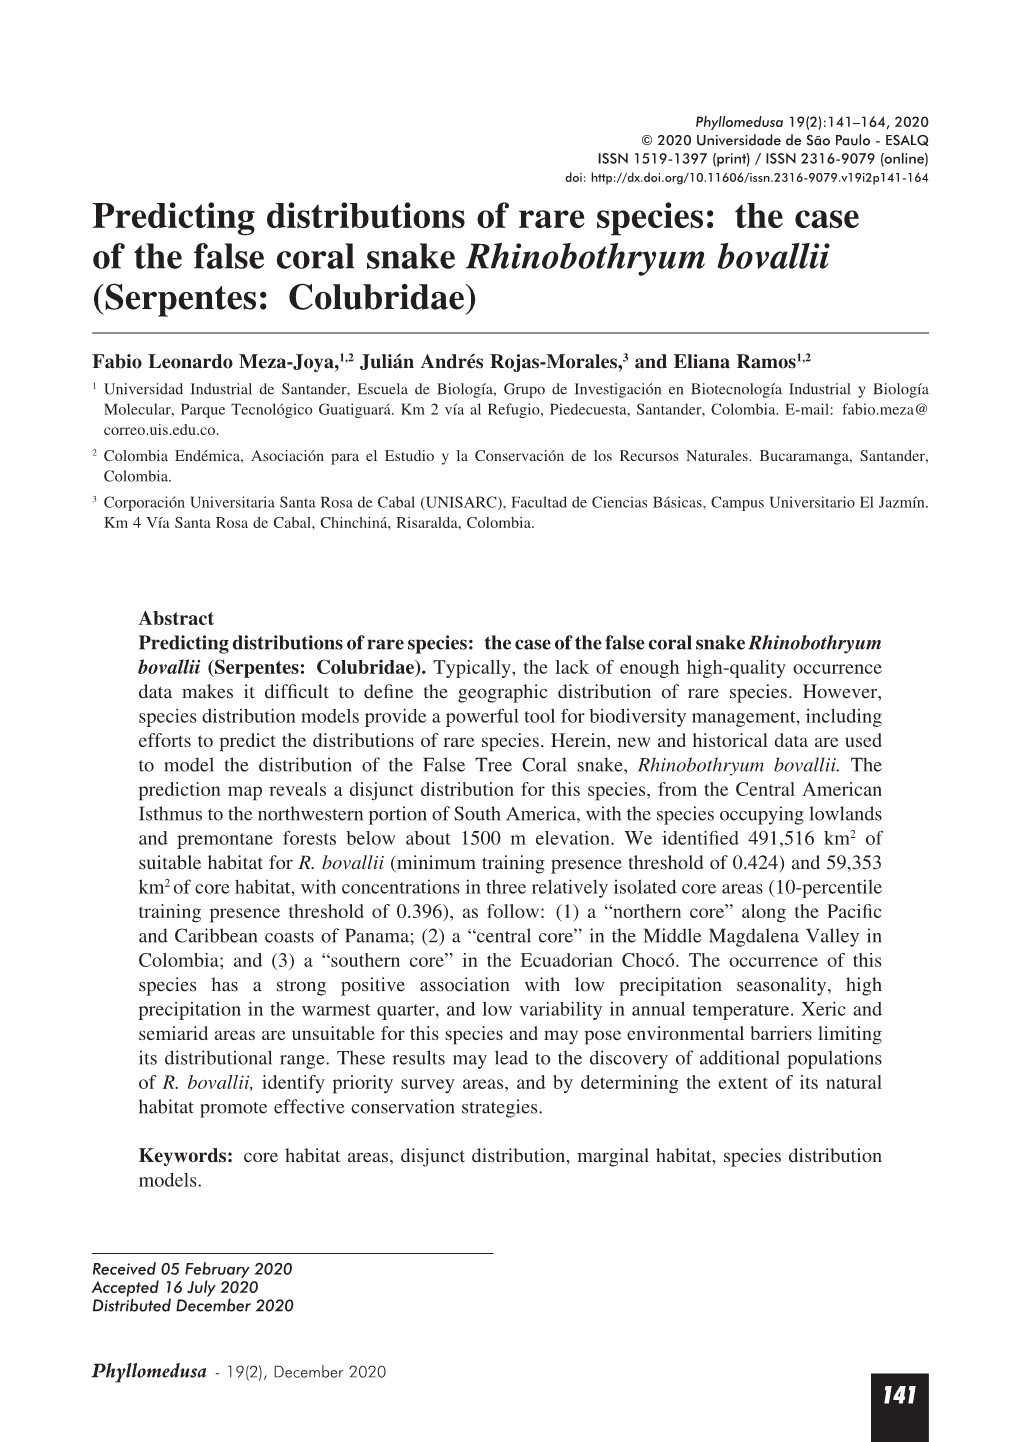 The Case of the False Coral Snake Rhinobothryum Bovallii (Serpentes: Colubridae)